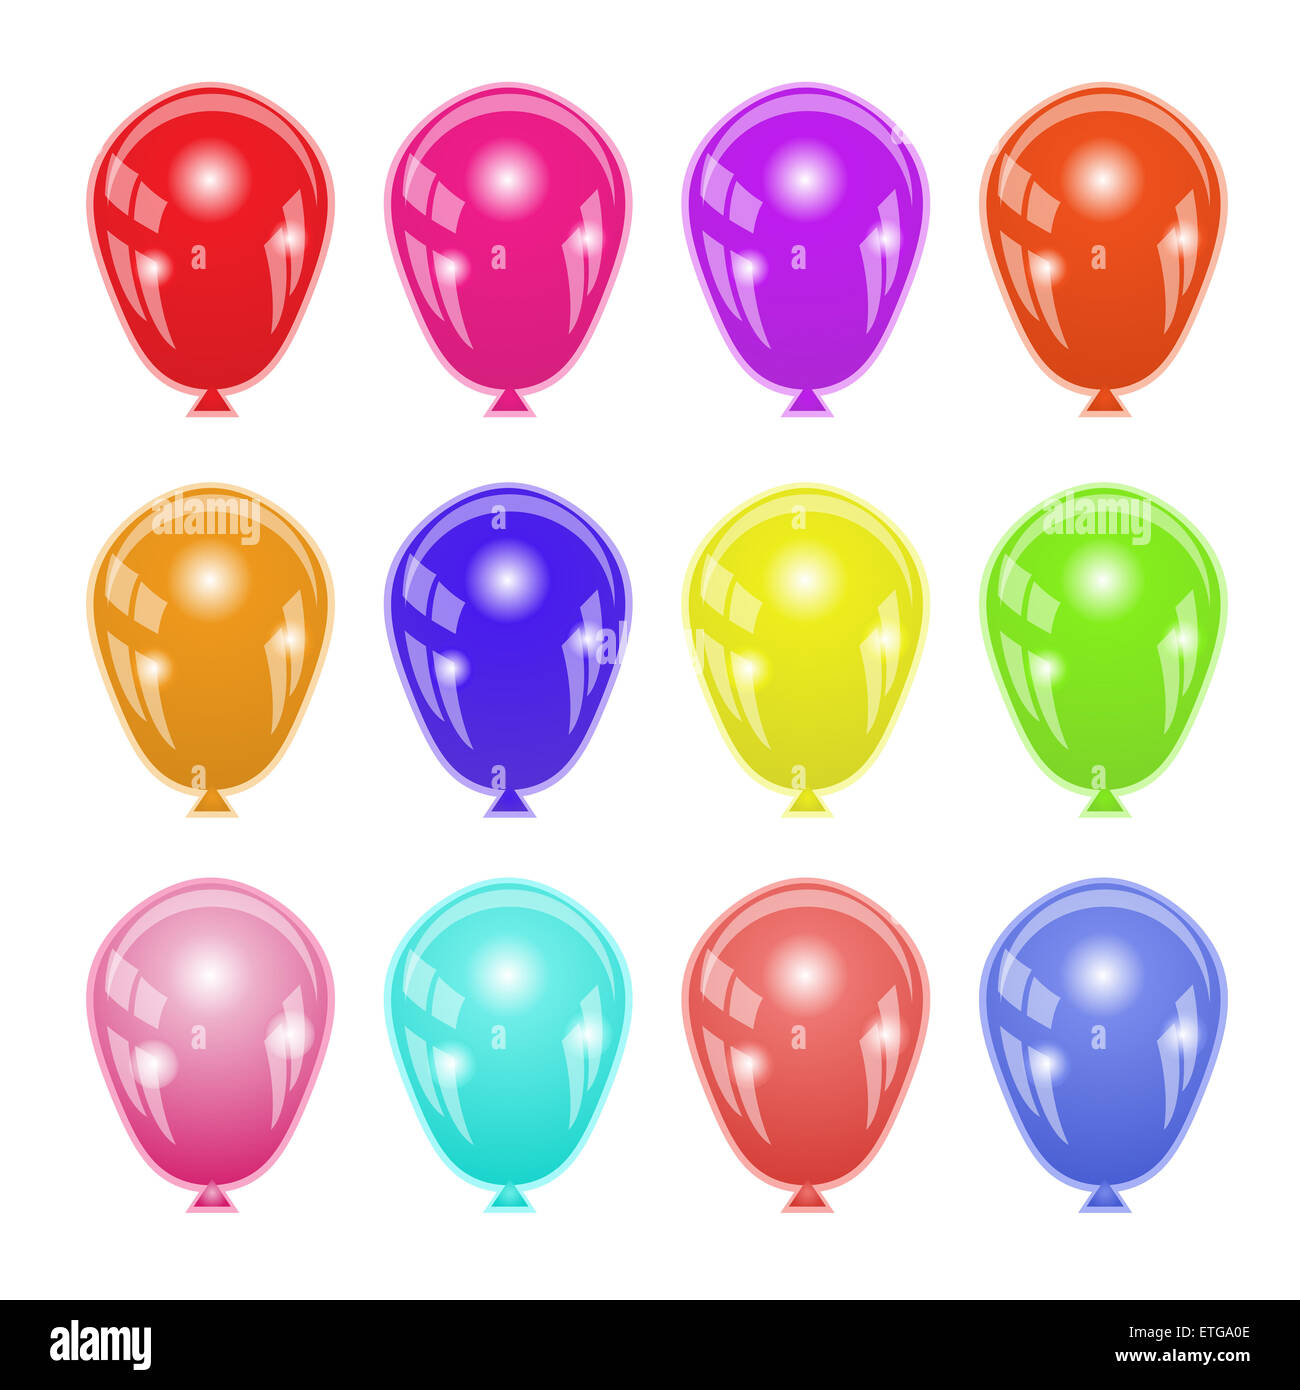 Reihe von bunten Luftballons, Isolated on White Background. Stockfoto